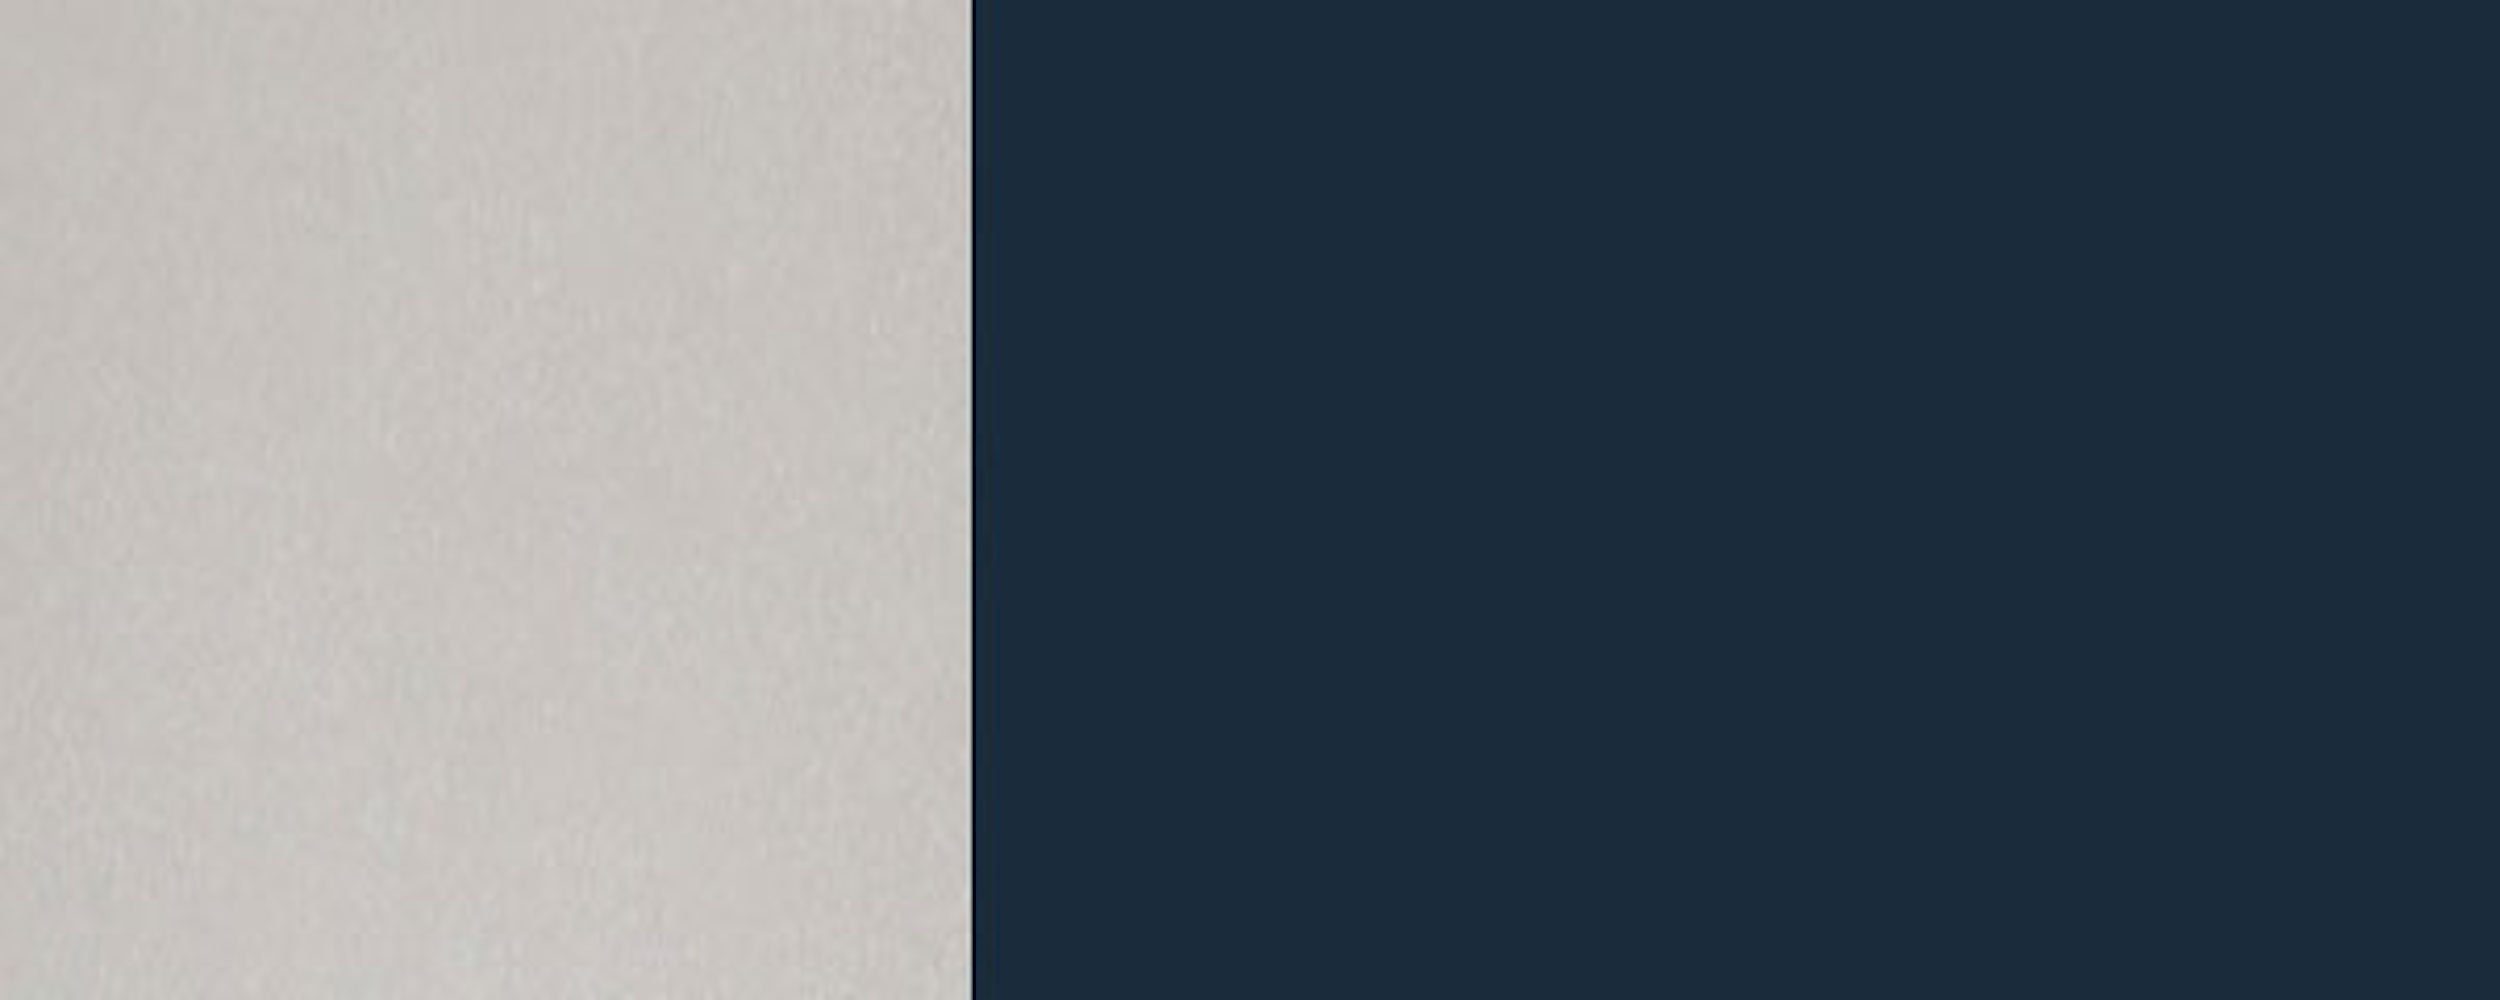 60cm 1-türig Feldmann-Wohnen (Tivoli) Klapphängeschrank Tivoli stahlblau und wählbar matt Korpusfarbe Front-